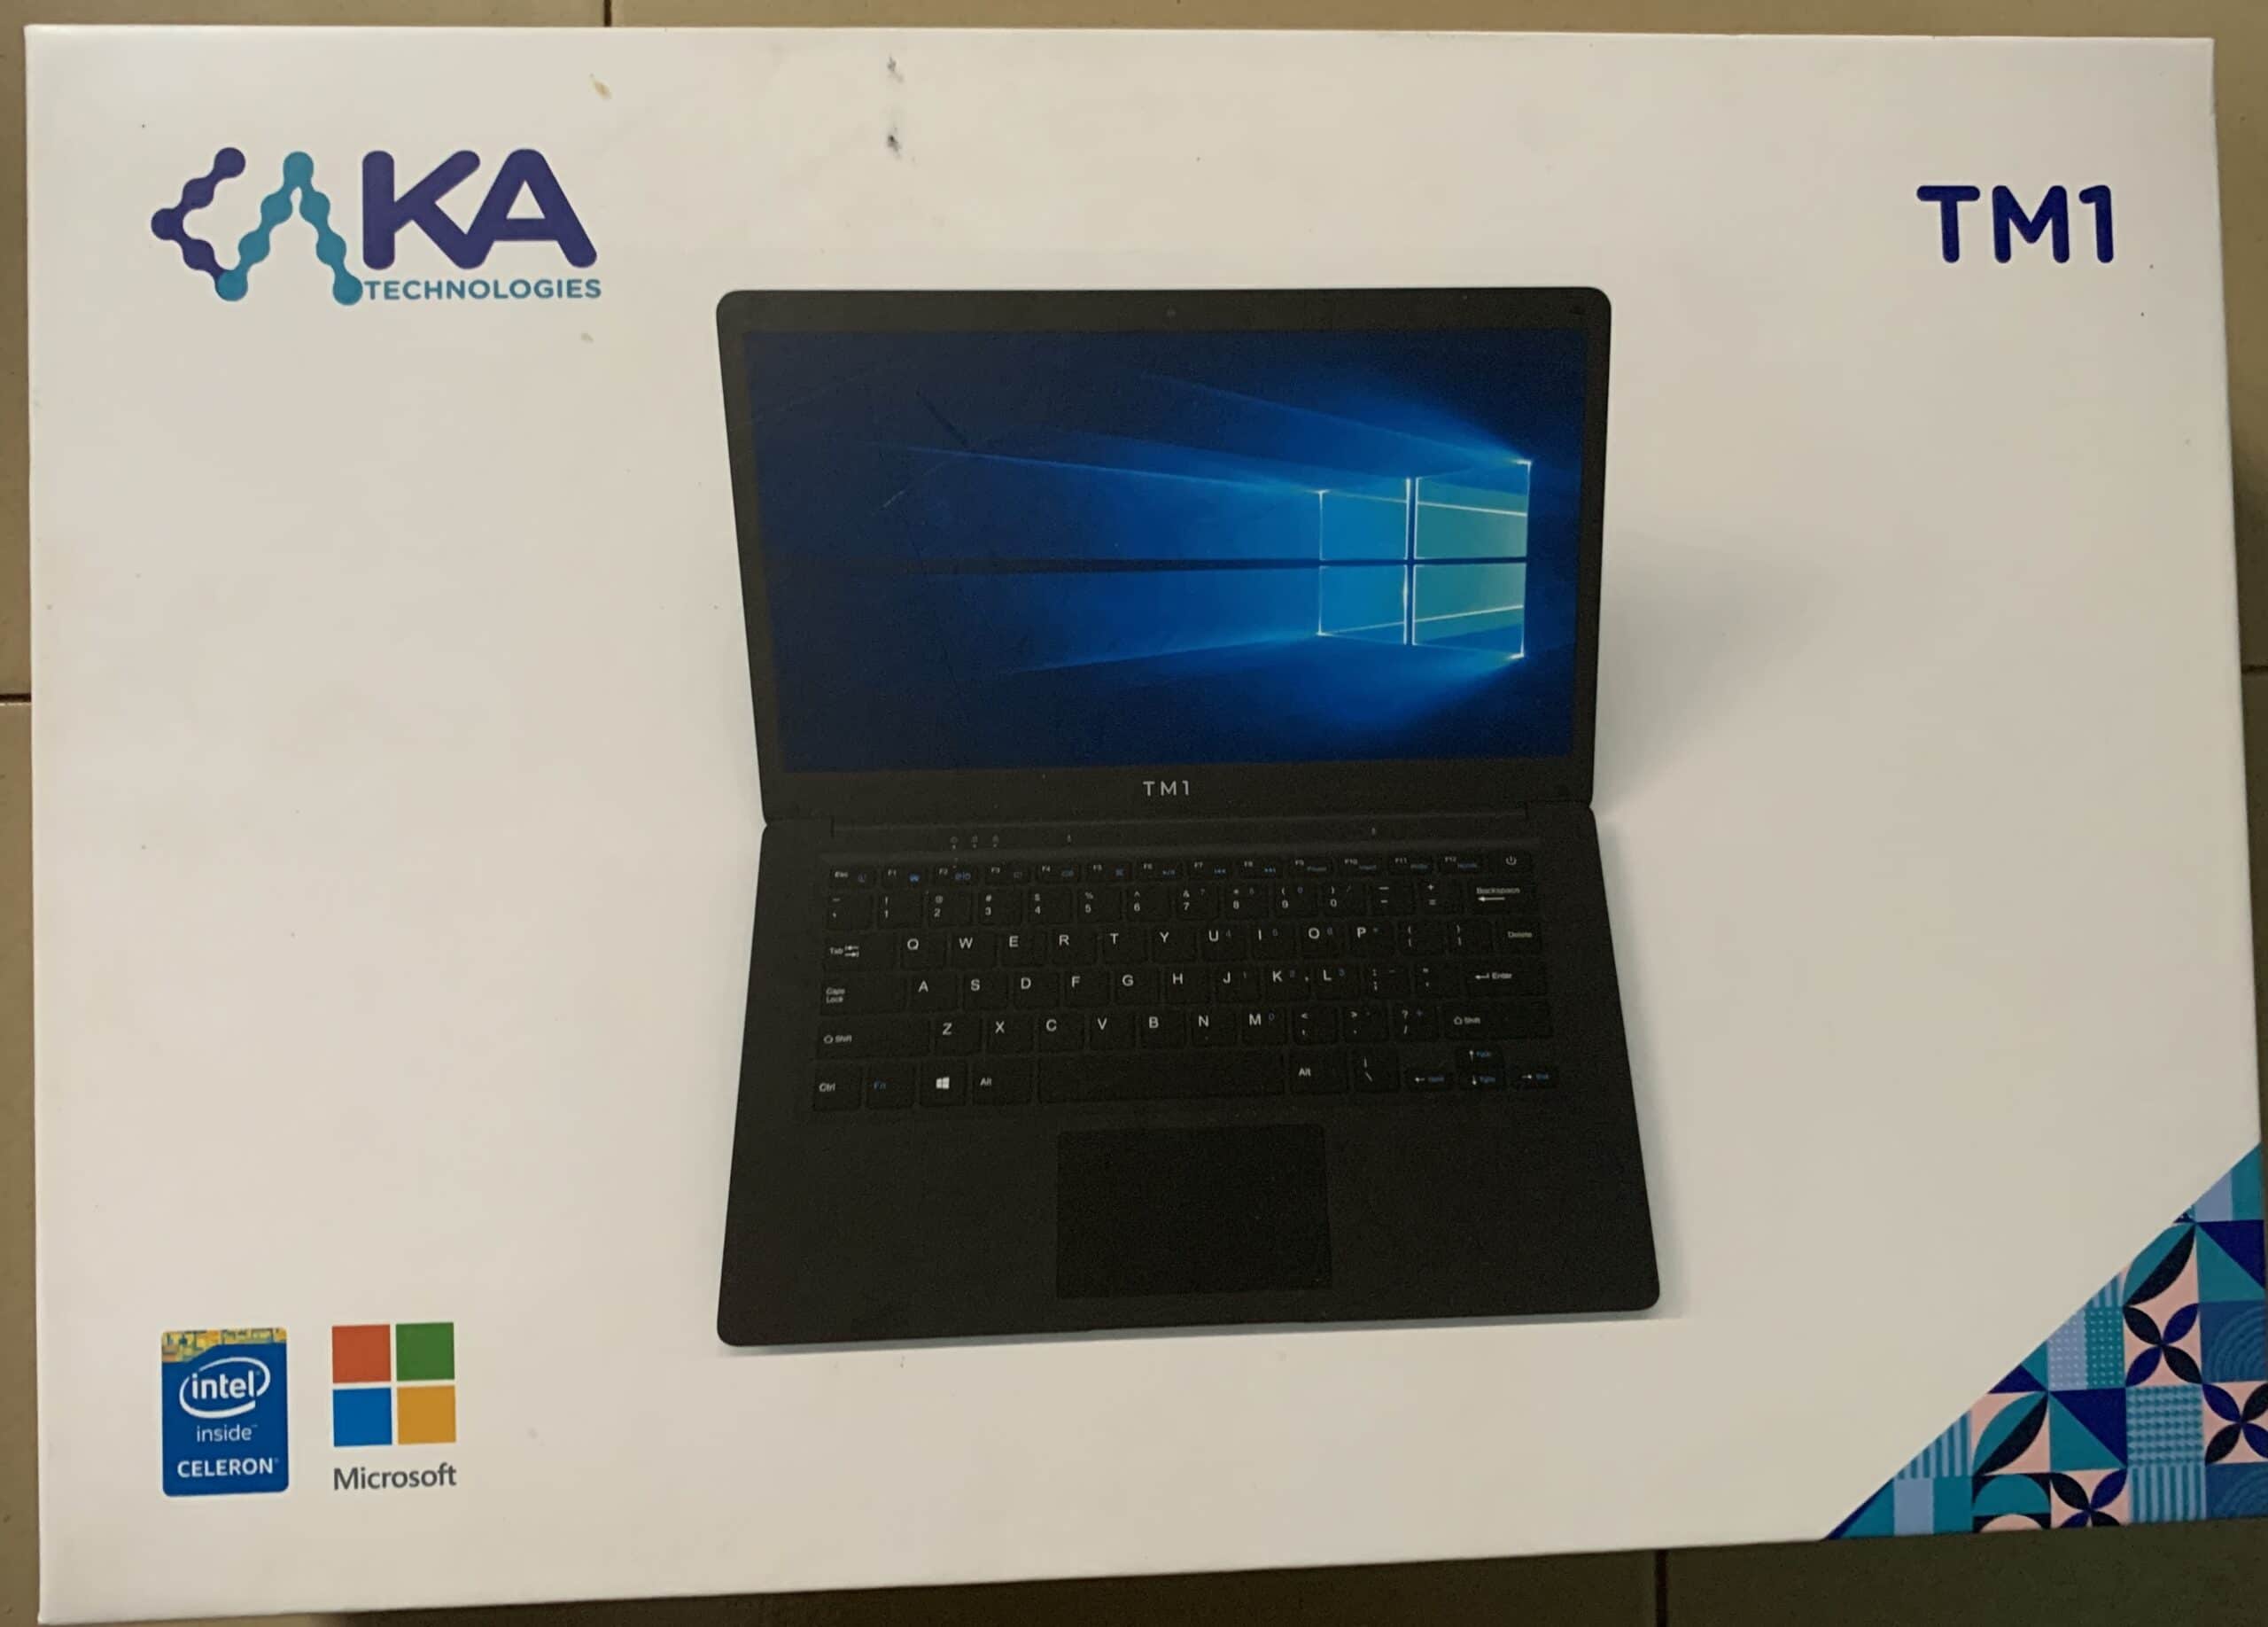 TM1 laptop